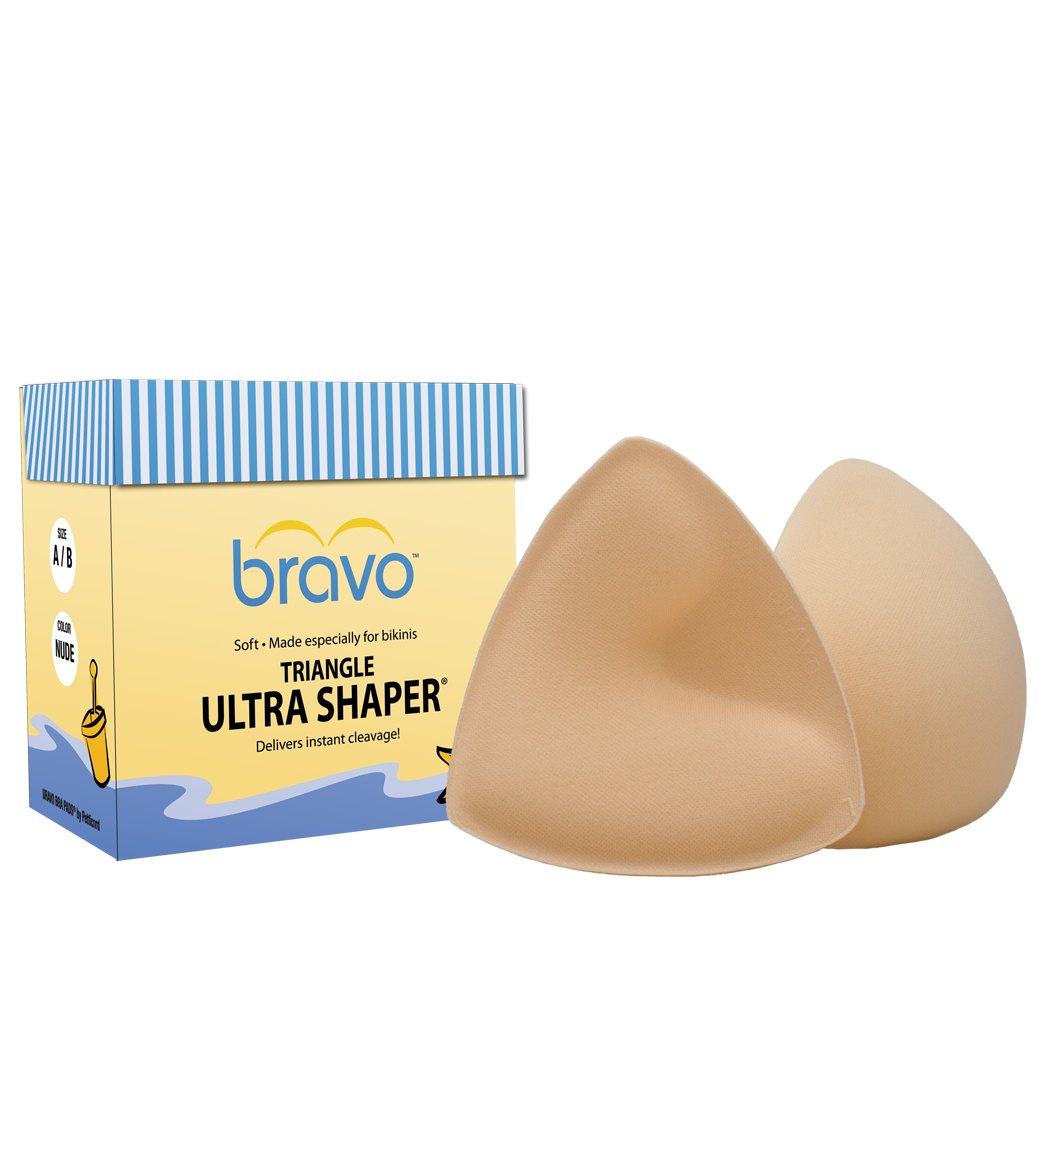 Bravo Triangle Ultra Shaper at